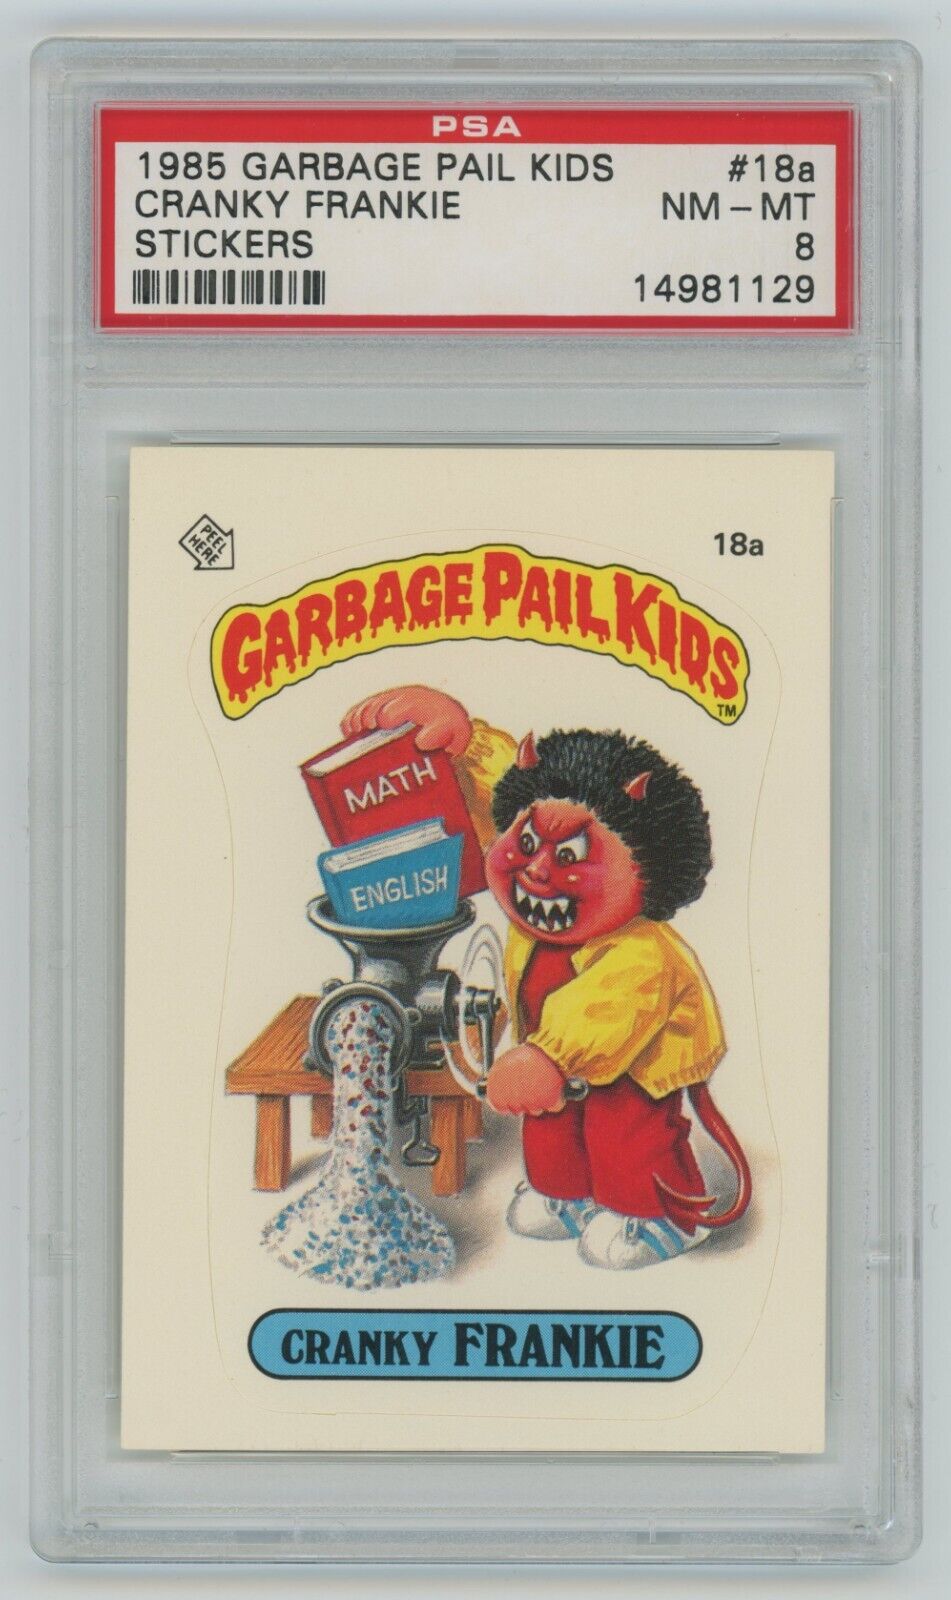 1985 Topps Garbage Pail Kids OS1 Series 1 CRANKY FRANKIE 18a GLOSSY Card PSA 8